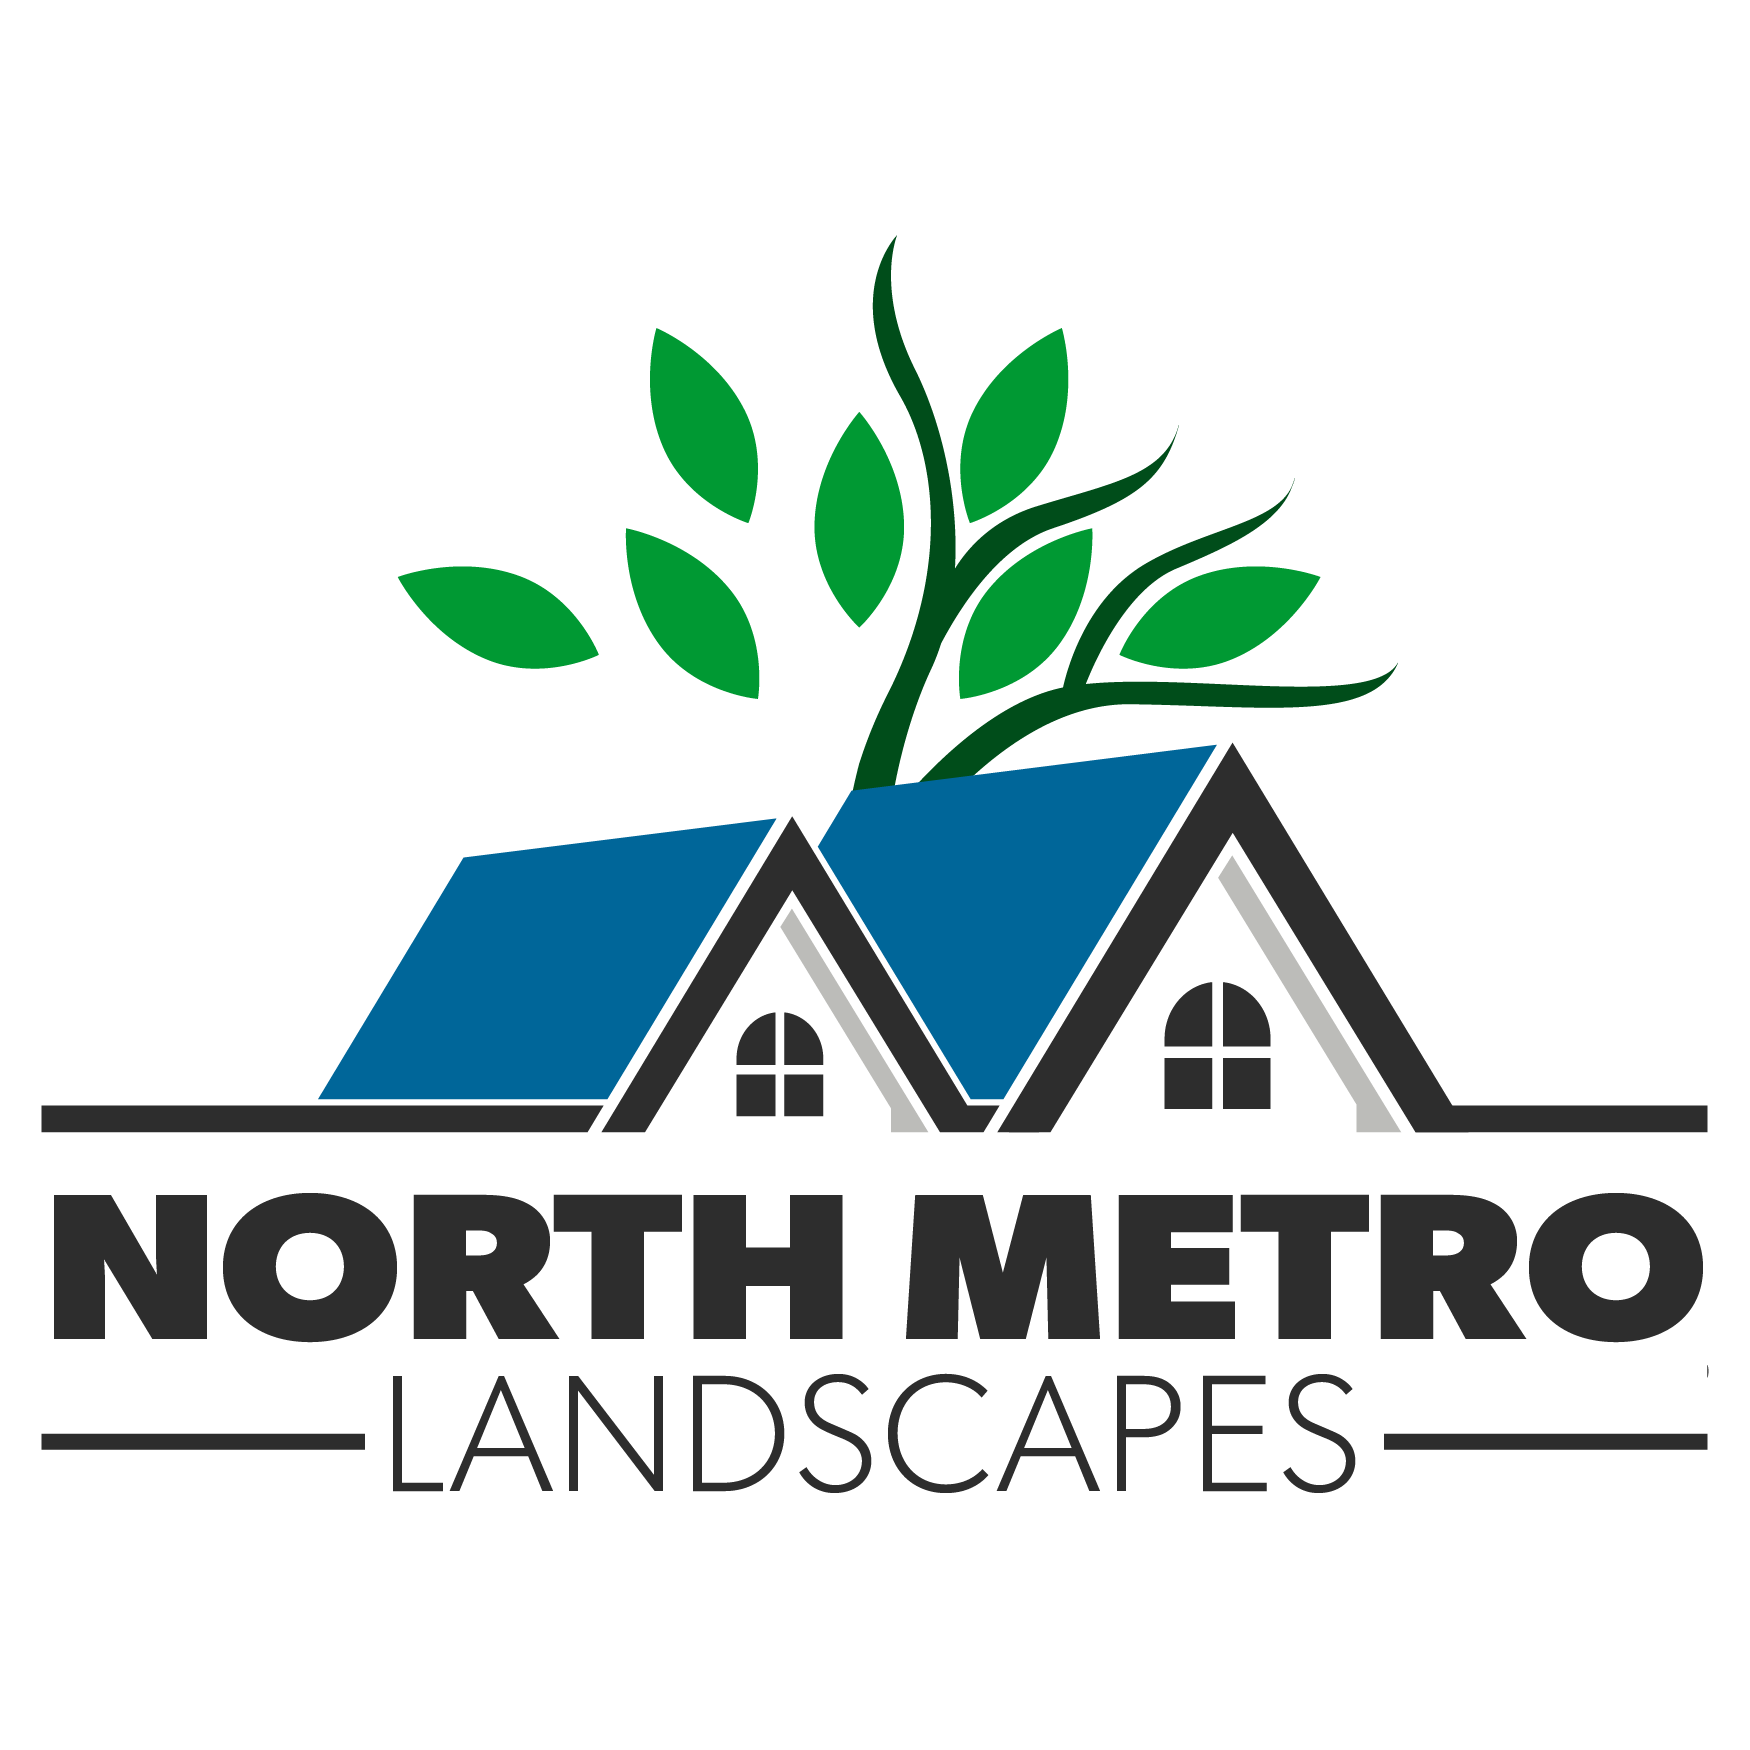 North Metro Landscapes